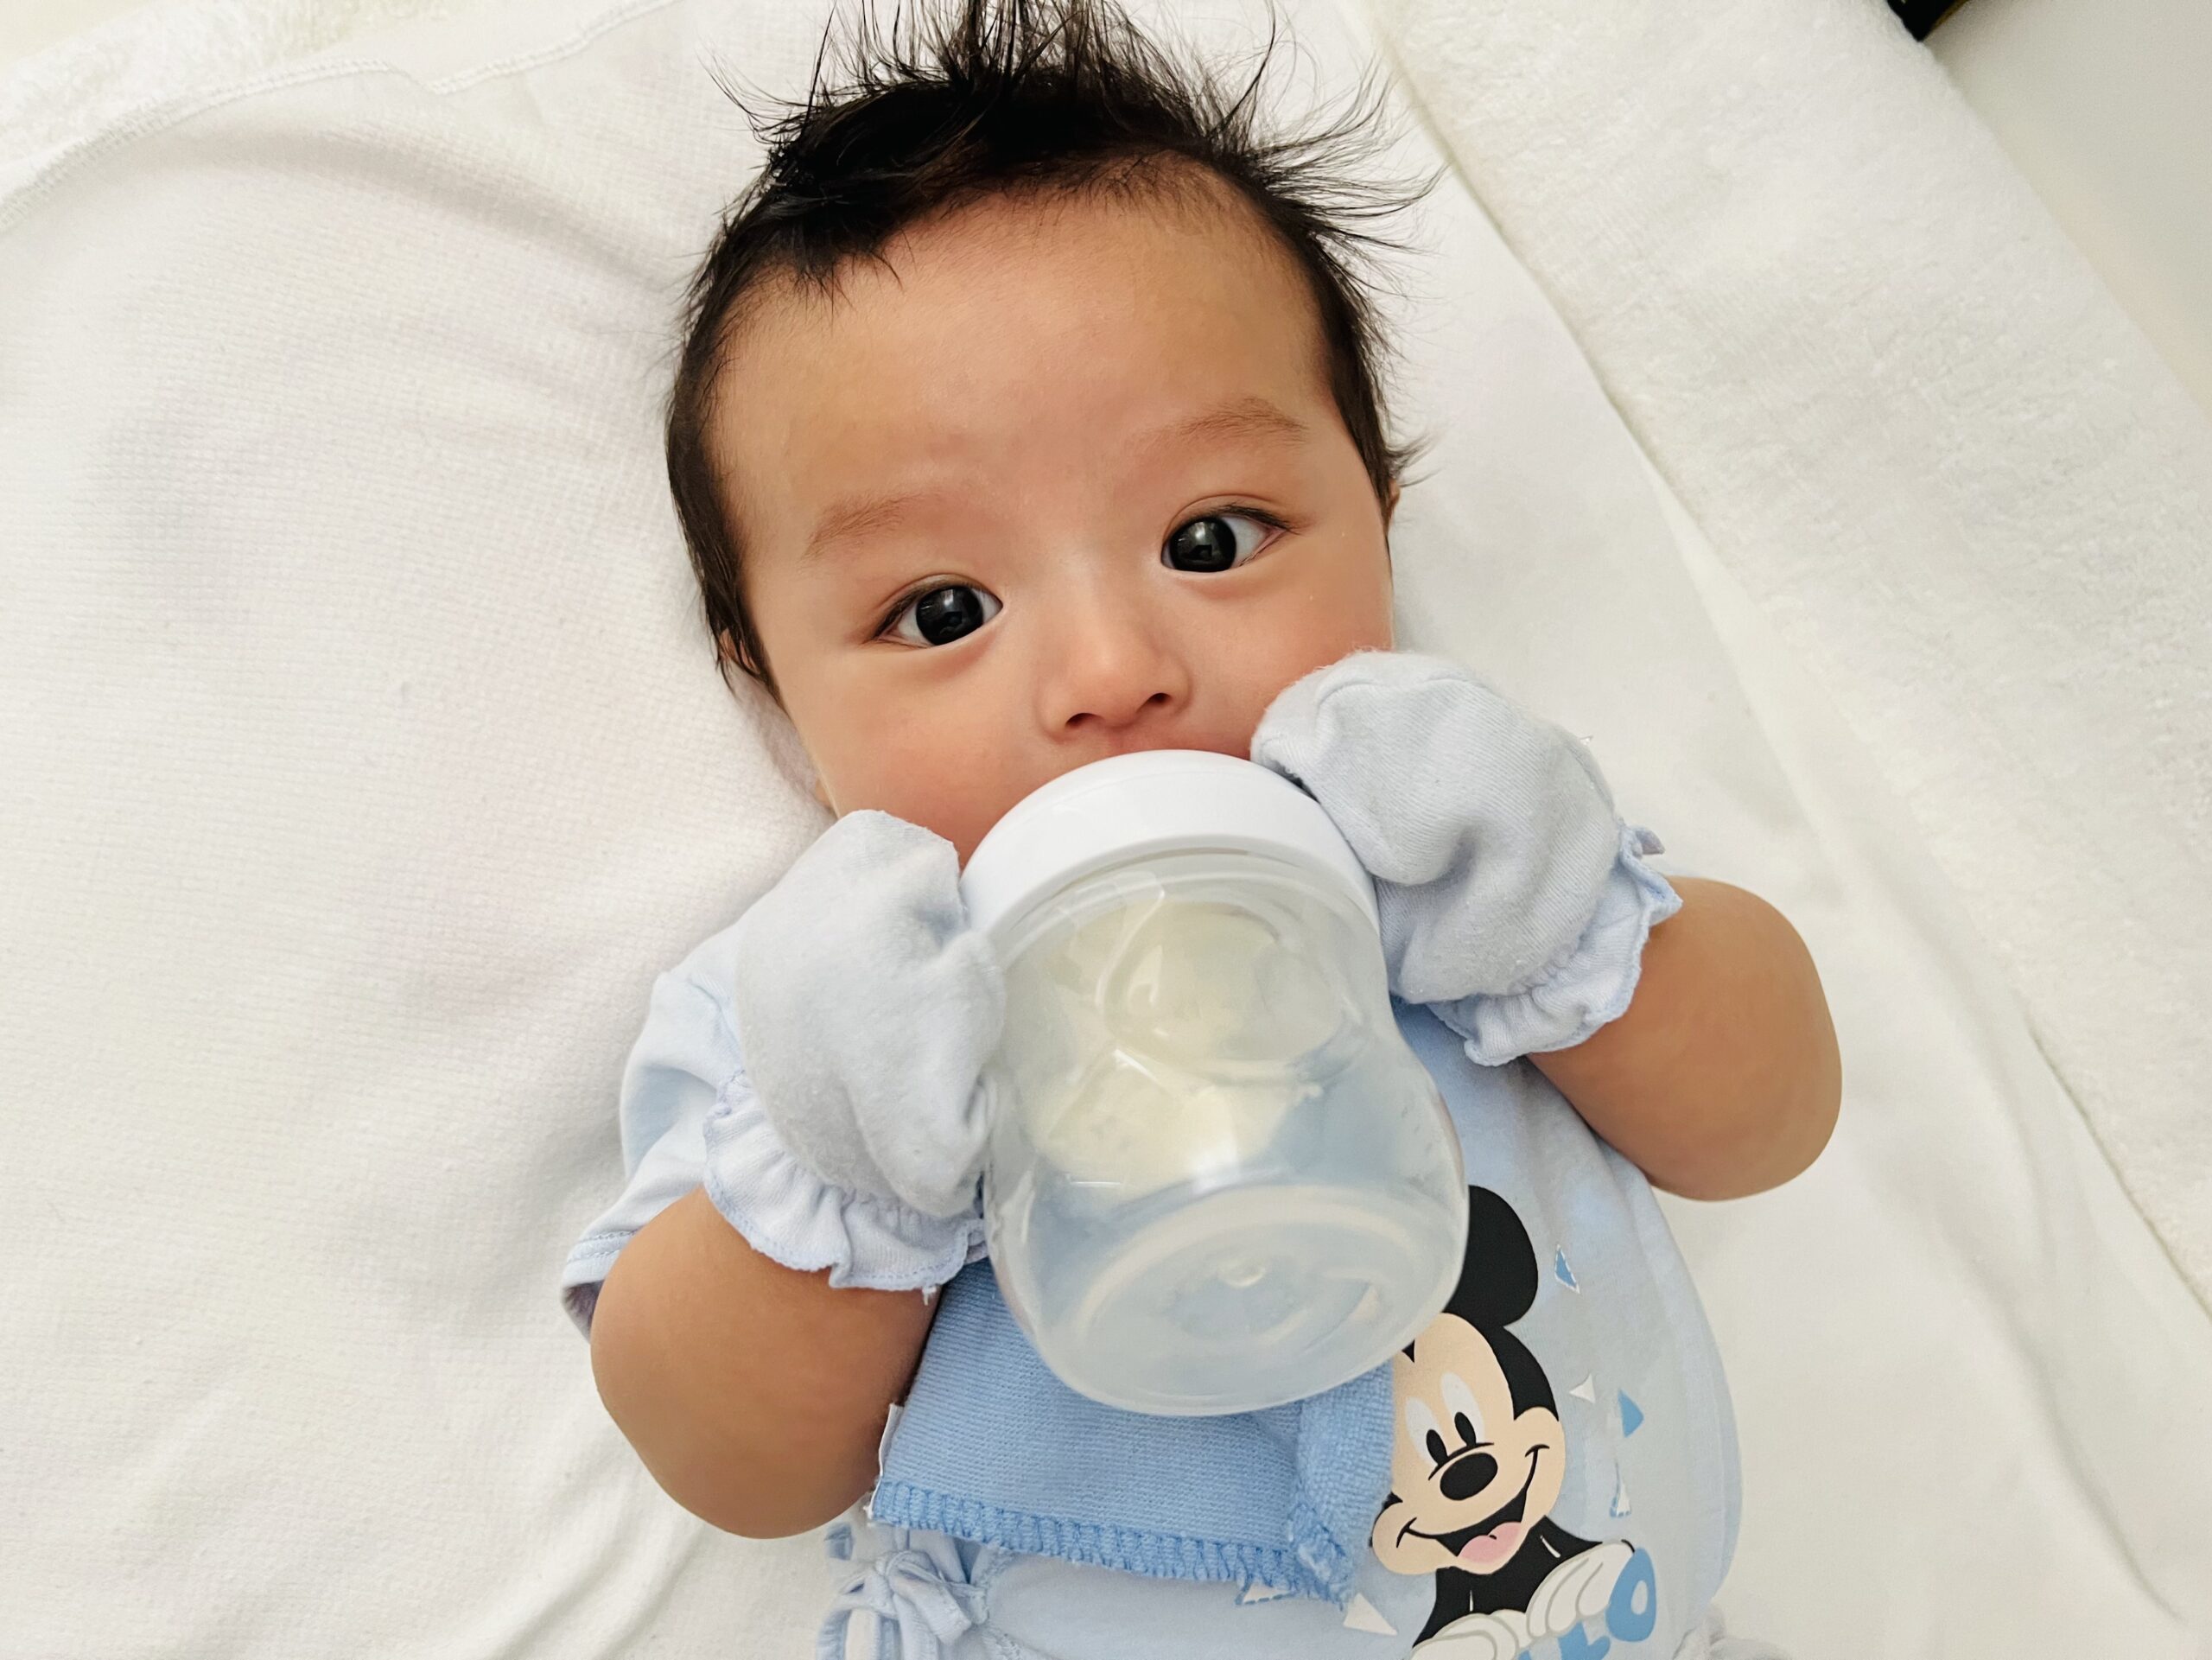 Baby Theo drinks milk